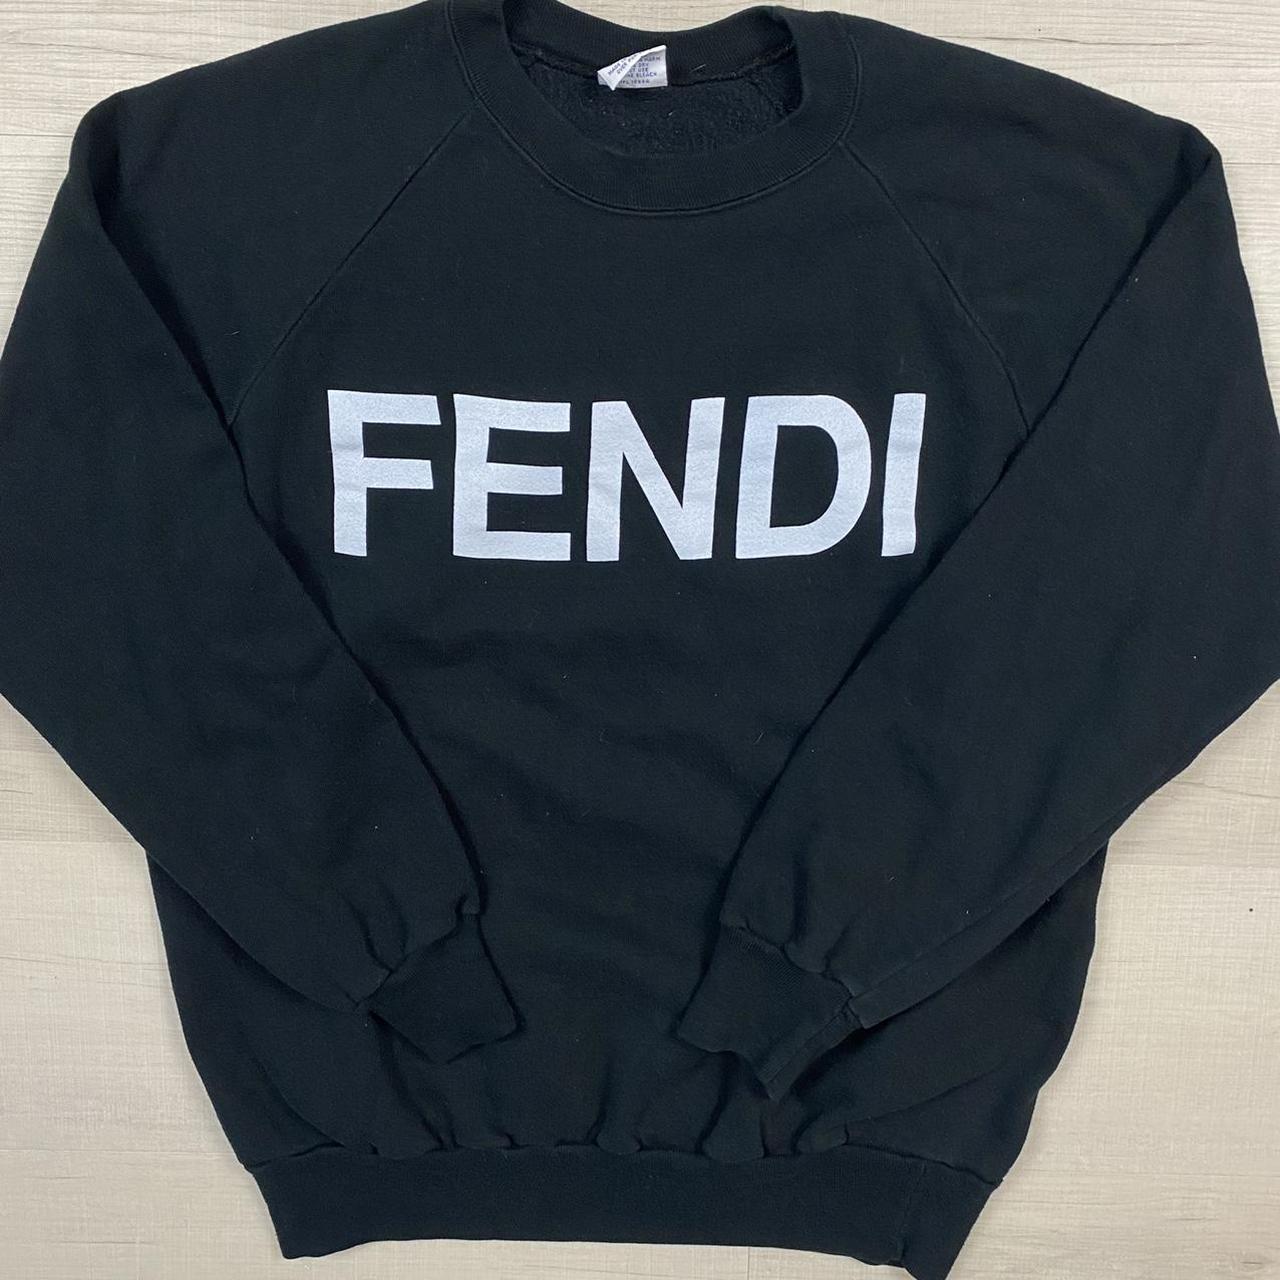 Fendi Men's Crewneck Sweaters